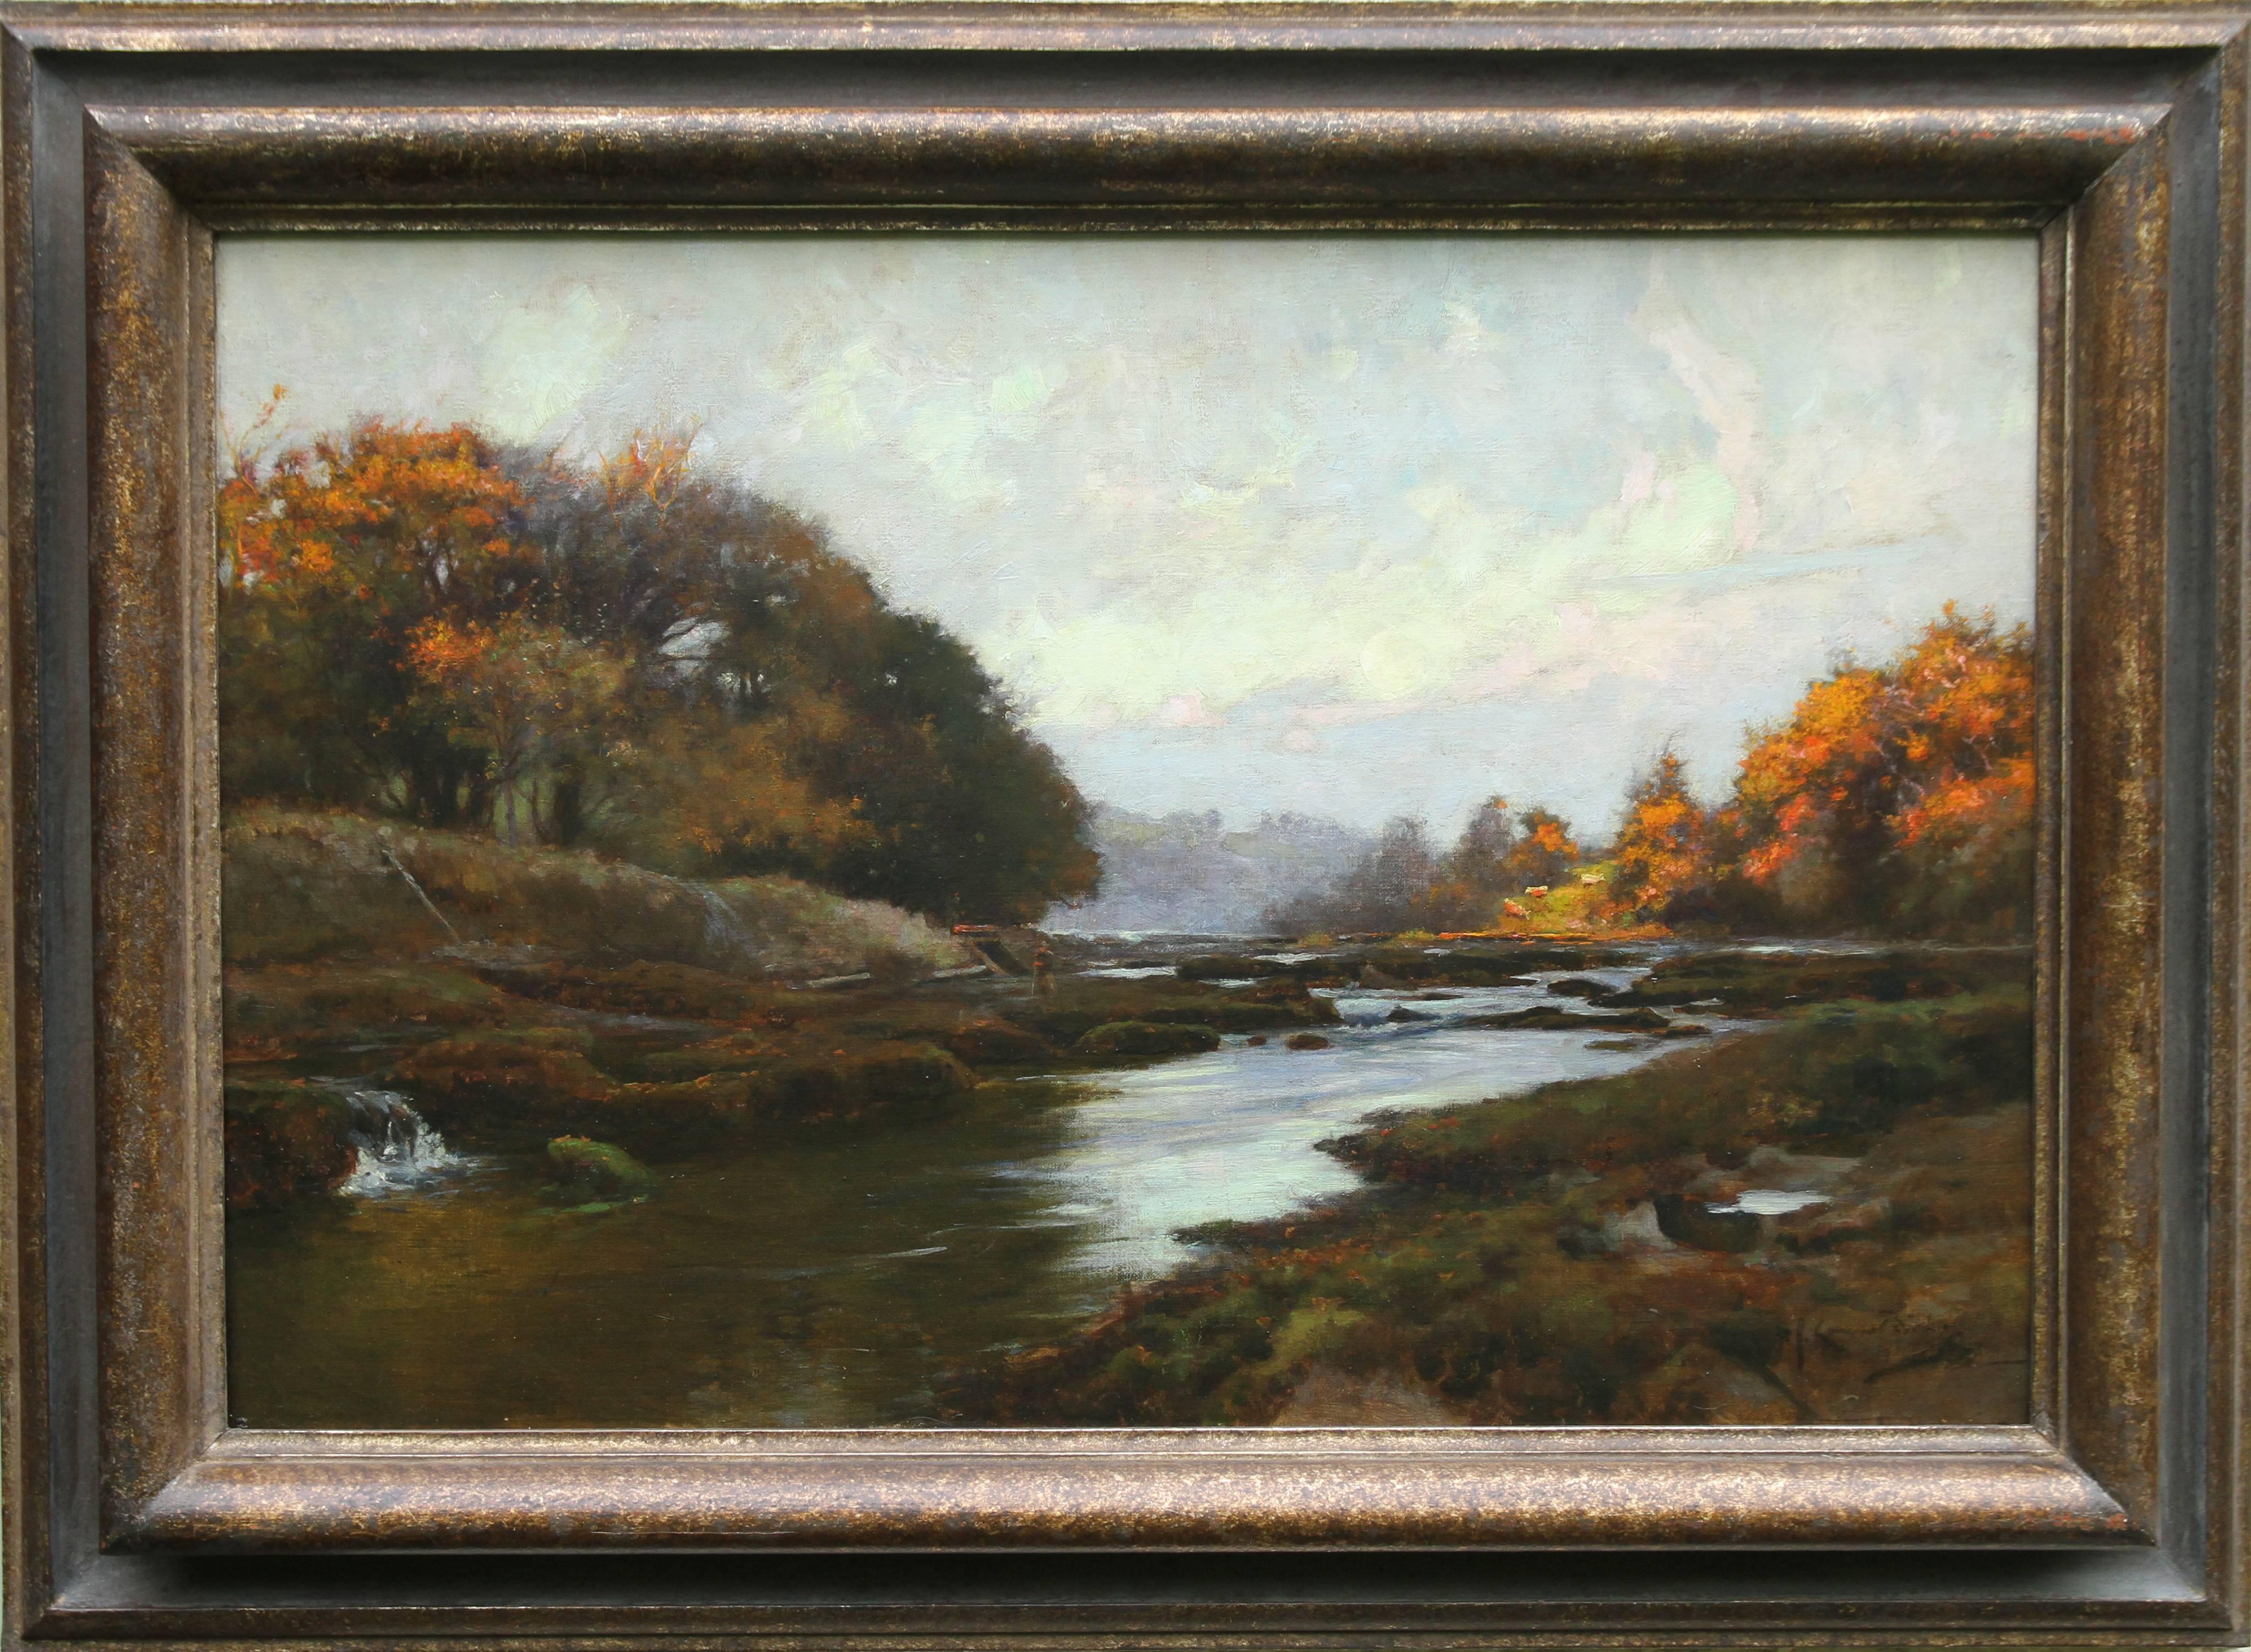 Samuel John Lamorna Birch Landscape Painting - River Lune nr Lancaster - British 19thC Impressionist art landscape oil painting